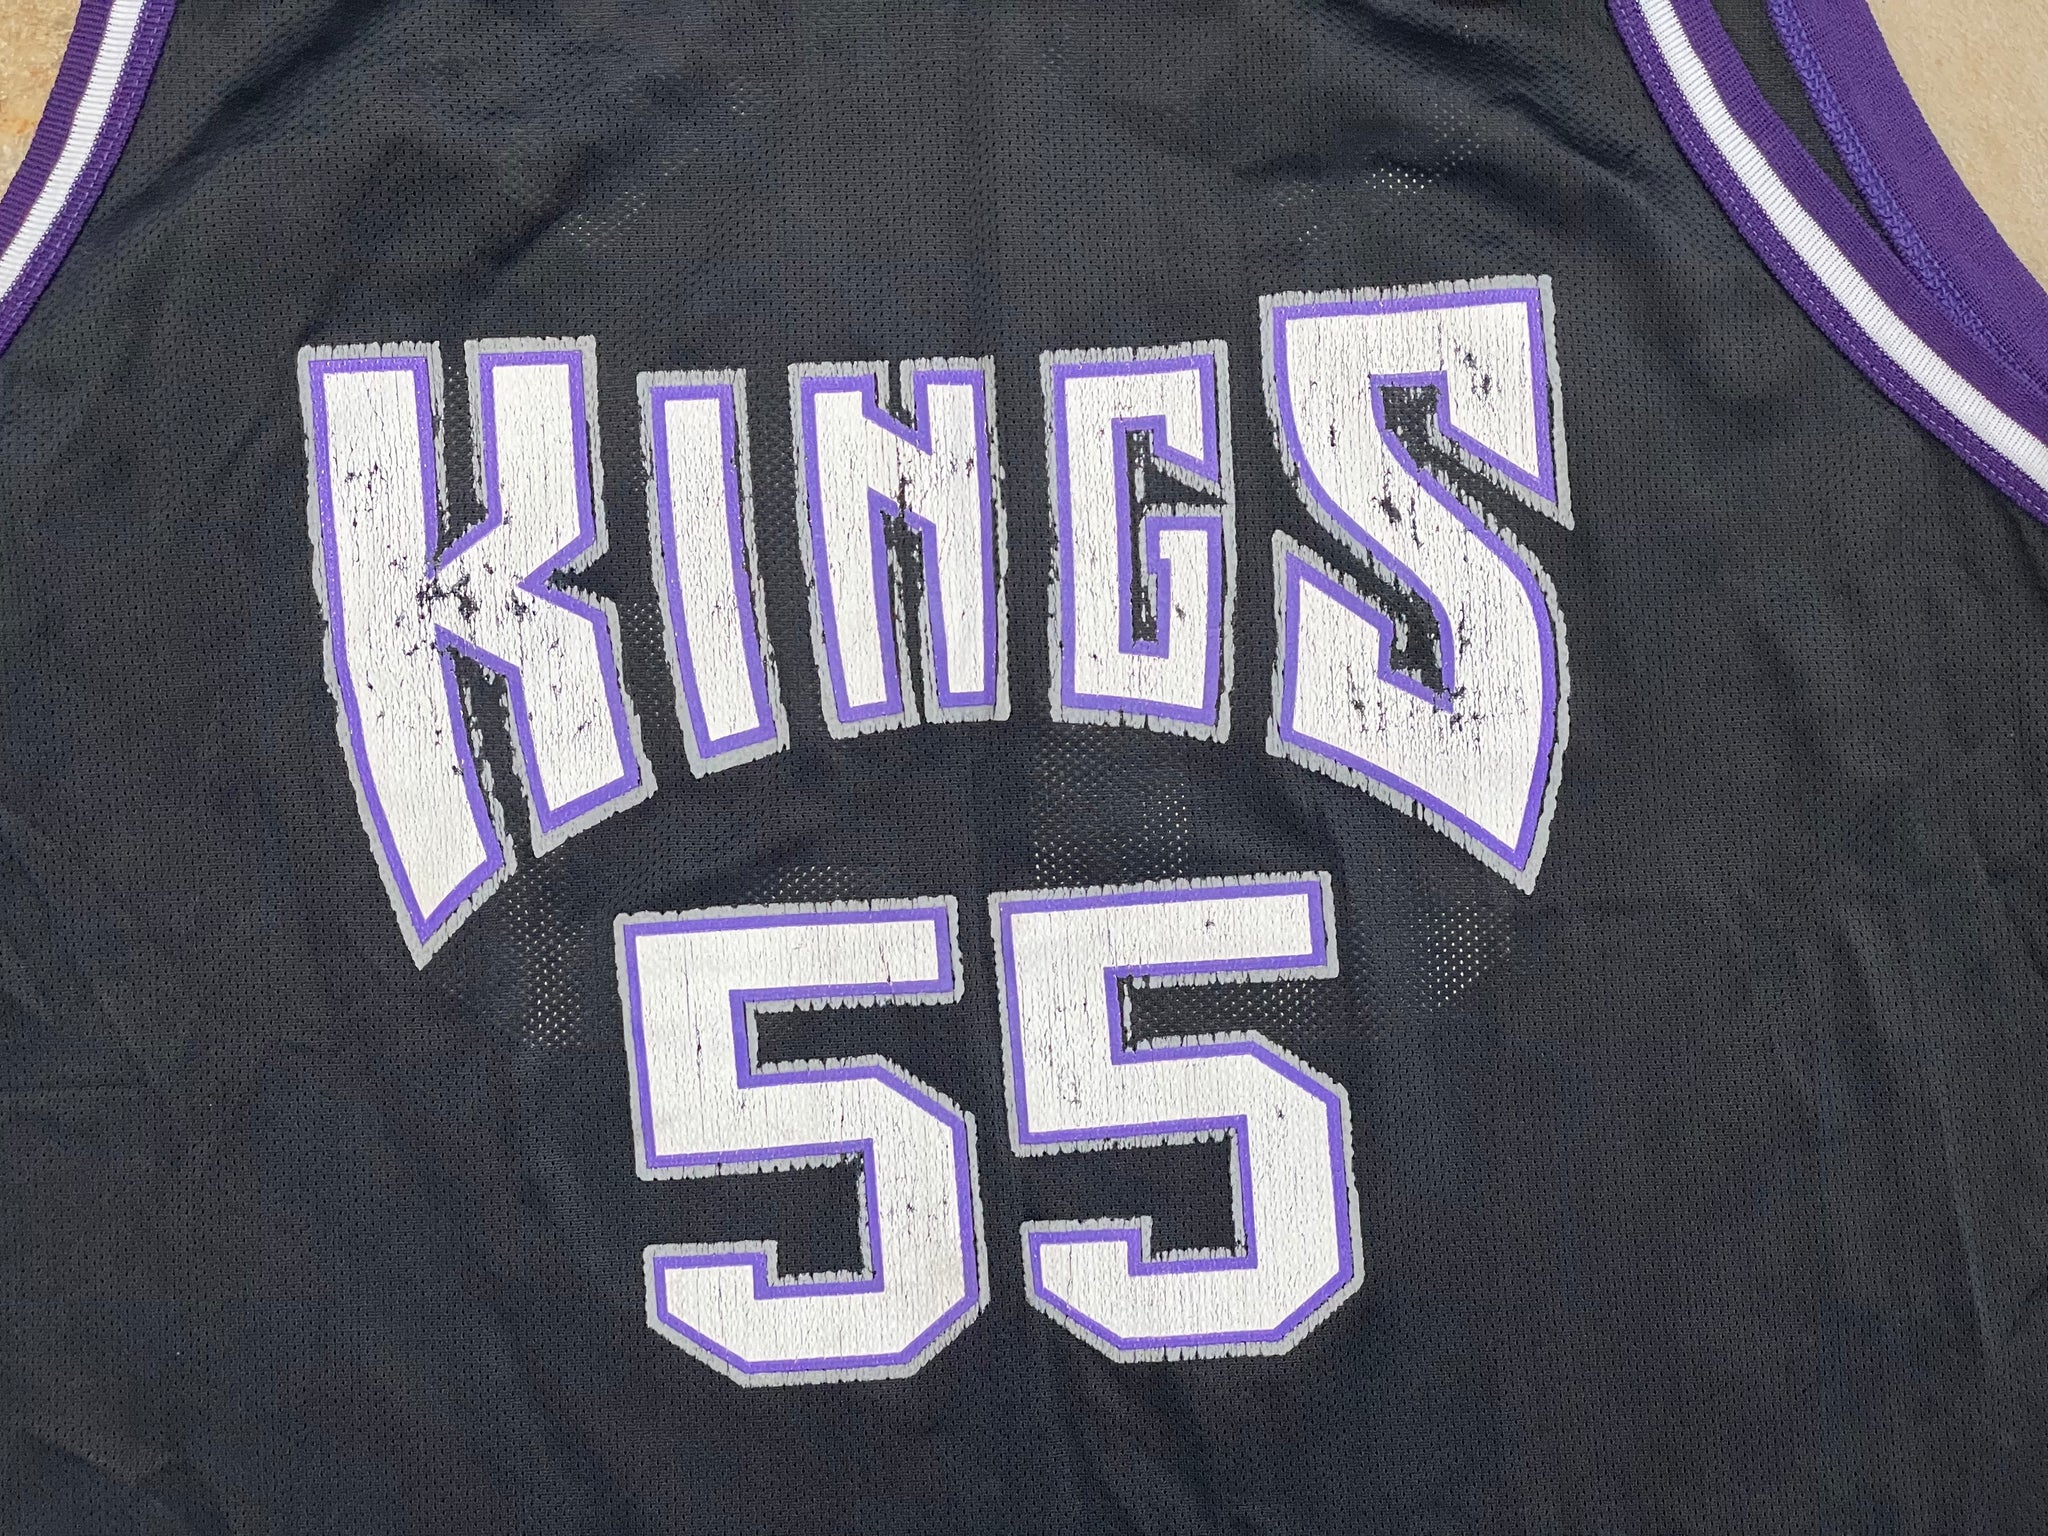 Vintage Sacramento Kings Jason Williams Champion Basketball Jersey